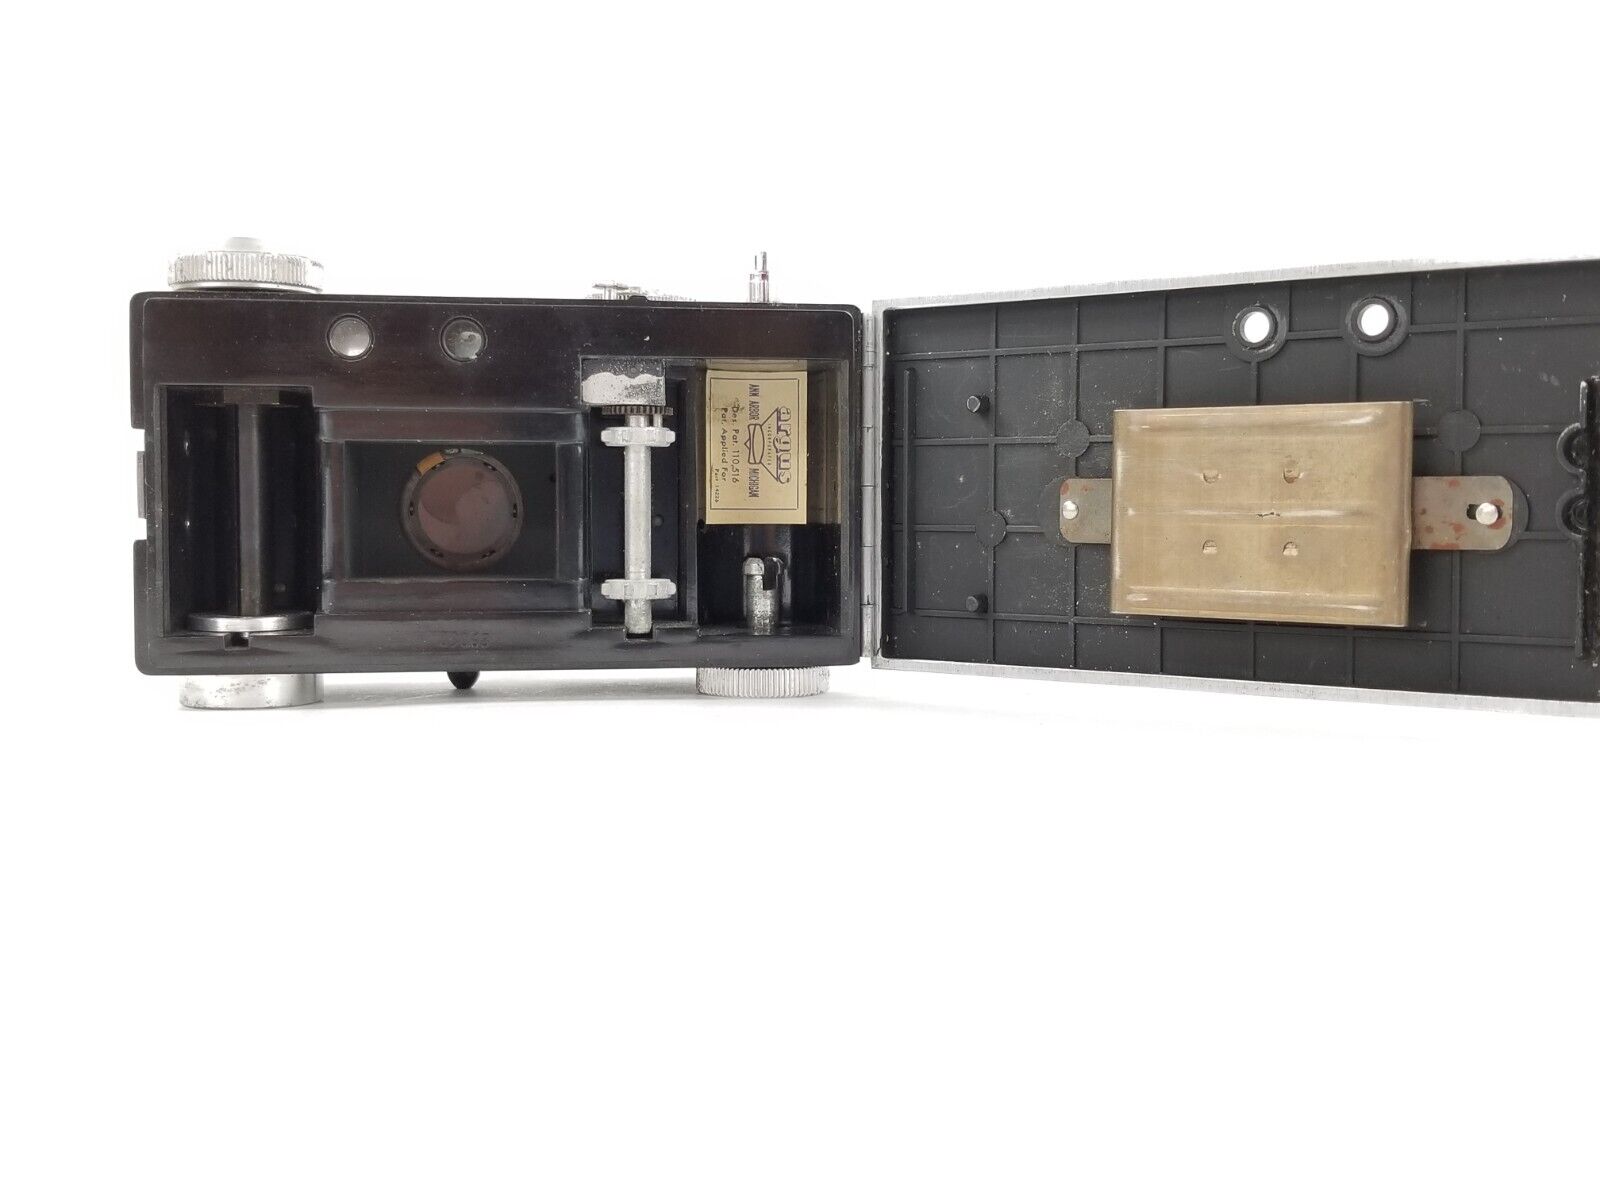 Argus C3 Range Finder Camera The Brick Vintage Film 50mm f/3.5 Cowhide Case